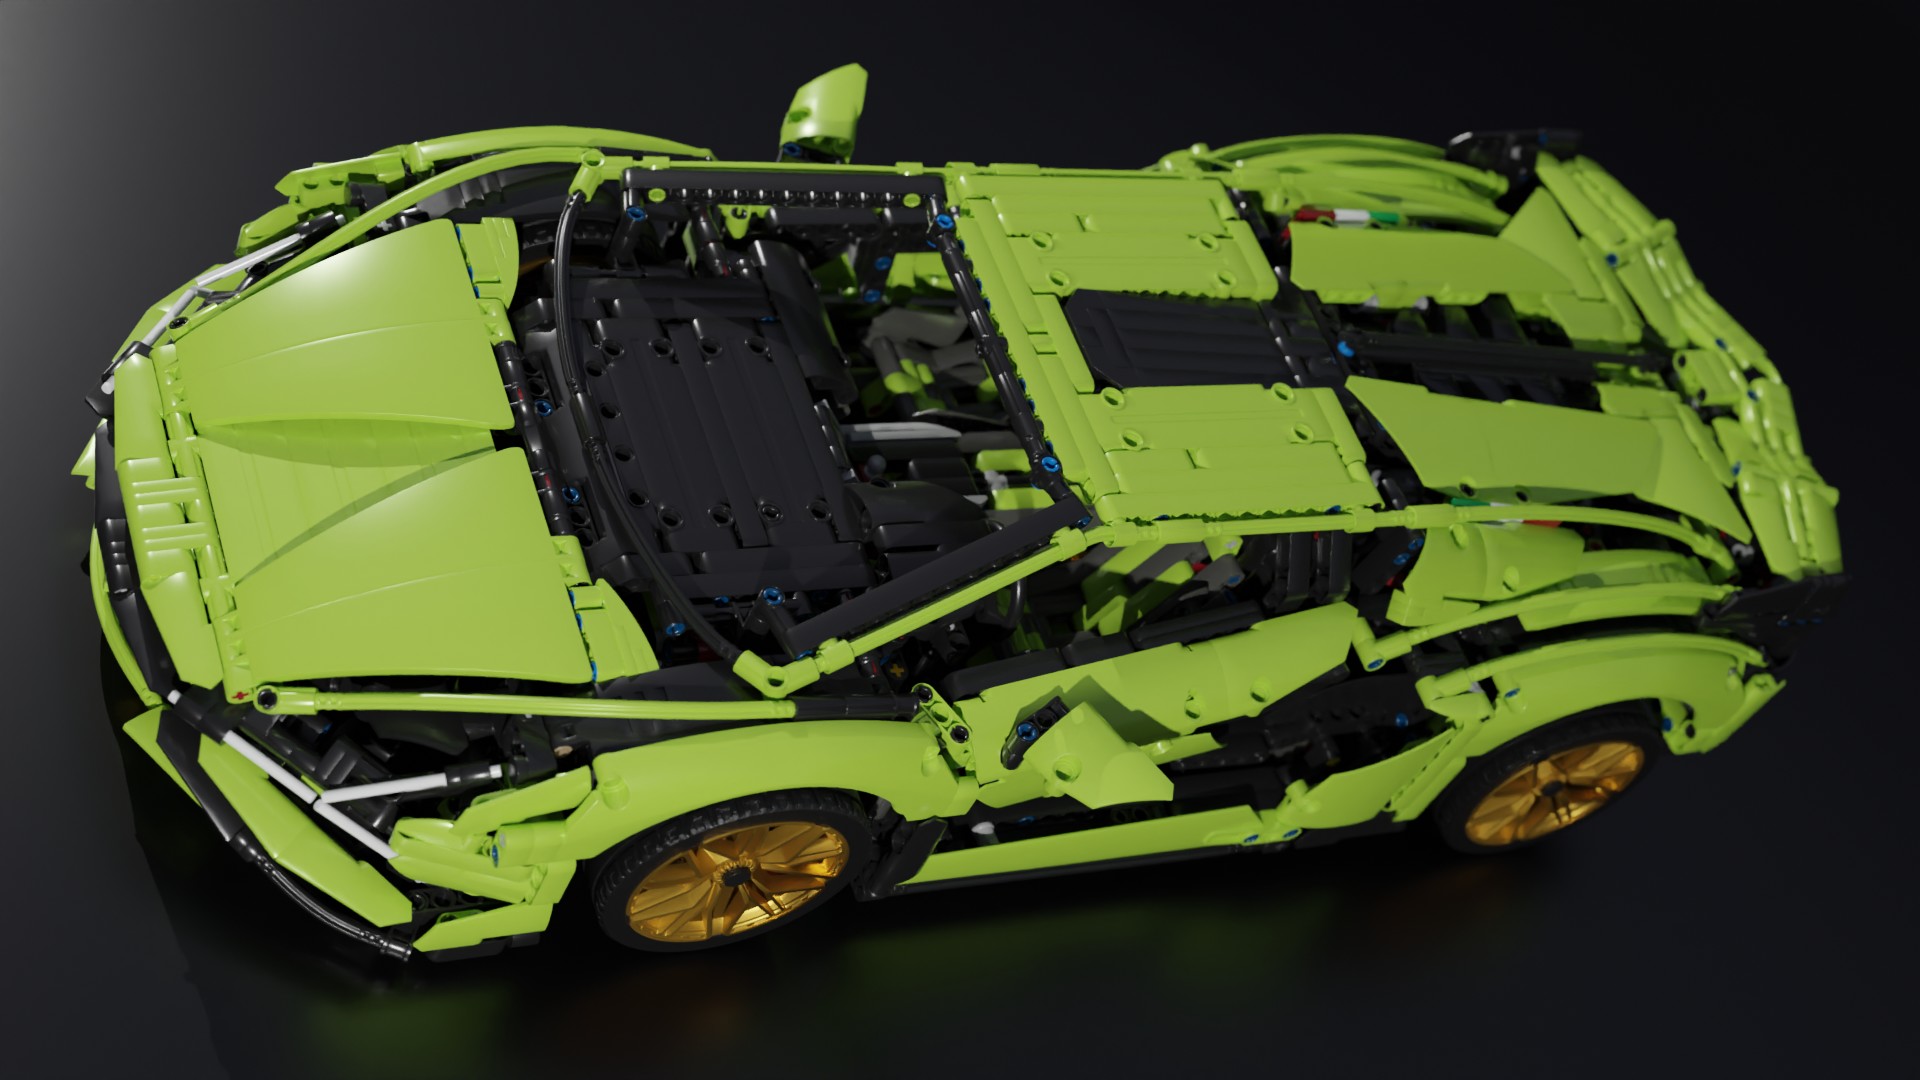 LEGO Technic Lamborghini - Finished Projects - Blender Artists